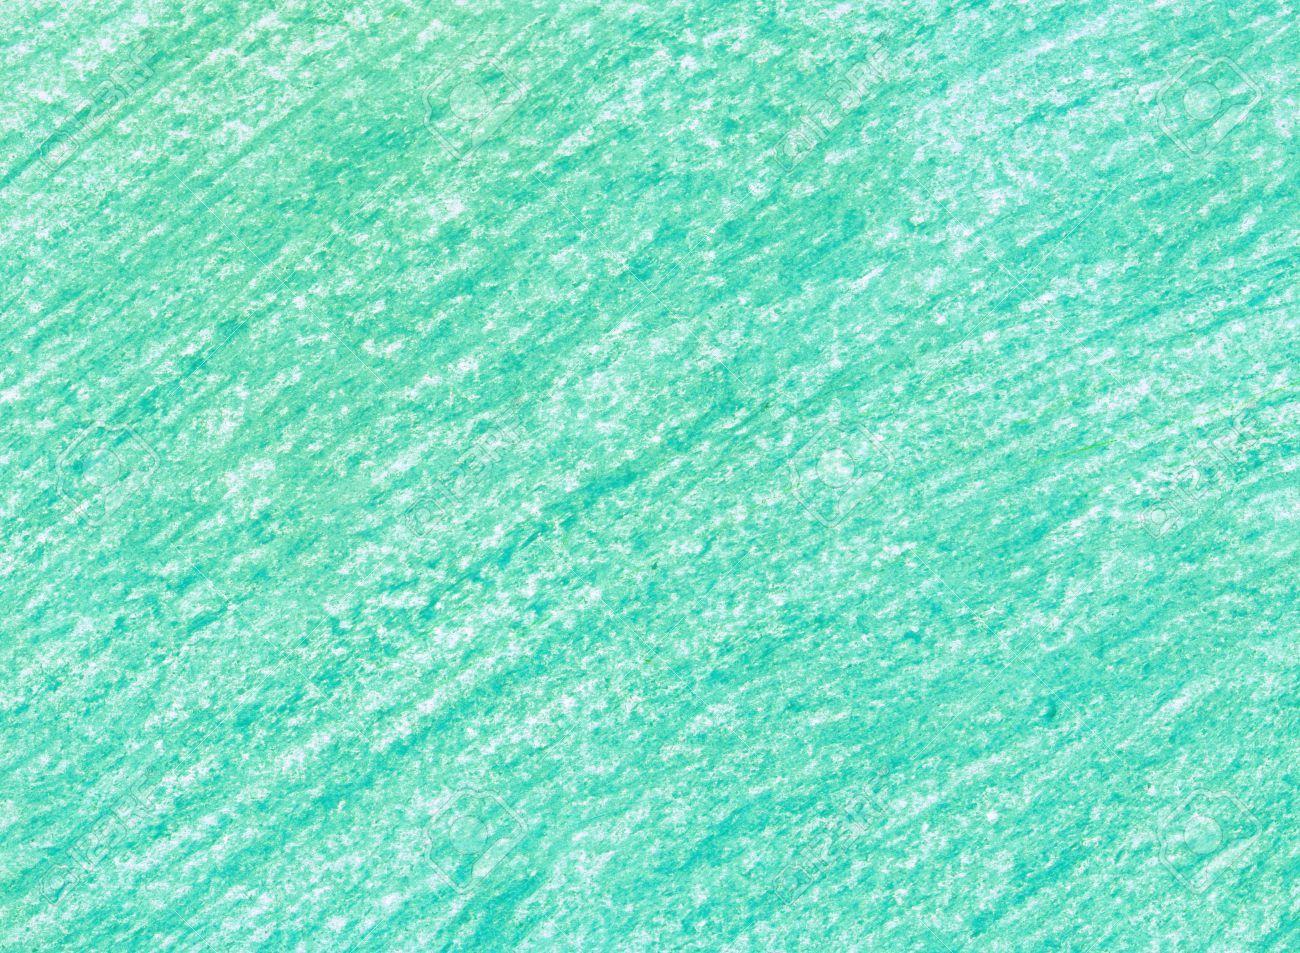 Crayon scribble emerald background. Blue green pastel crayon spo